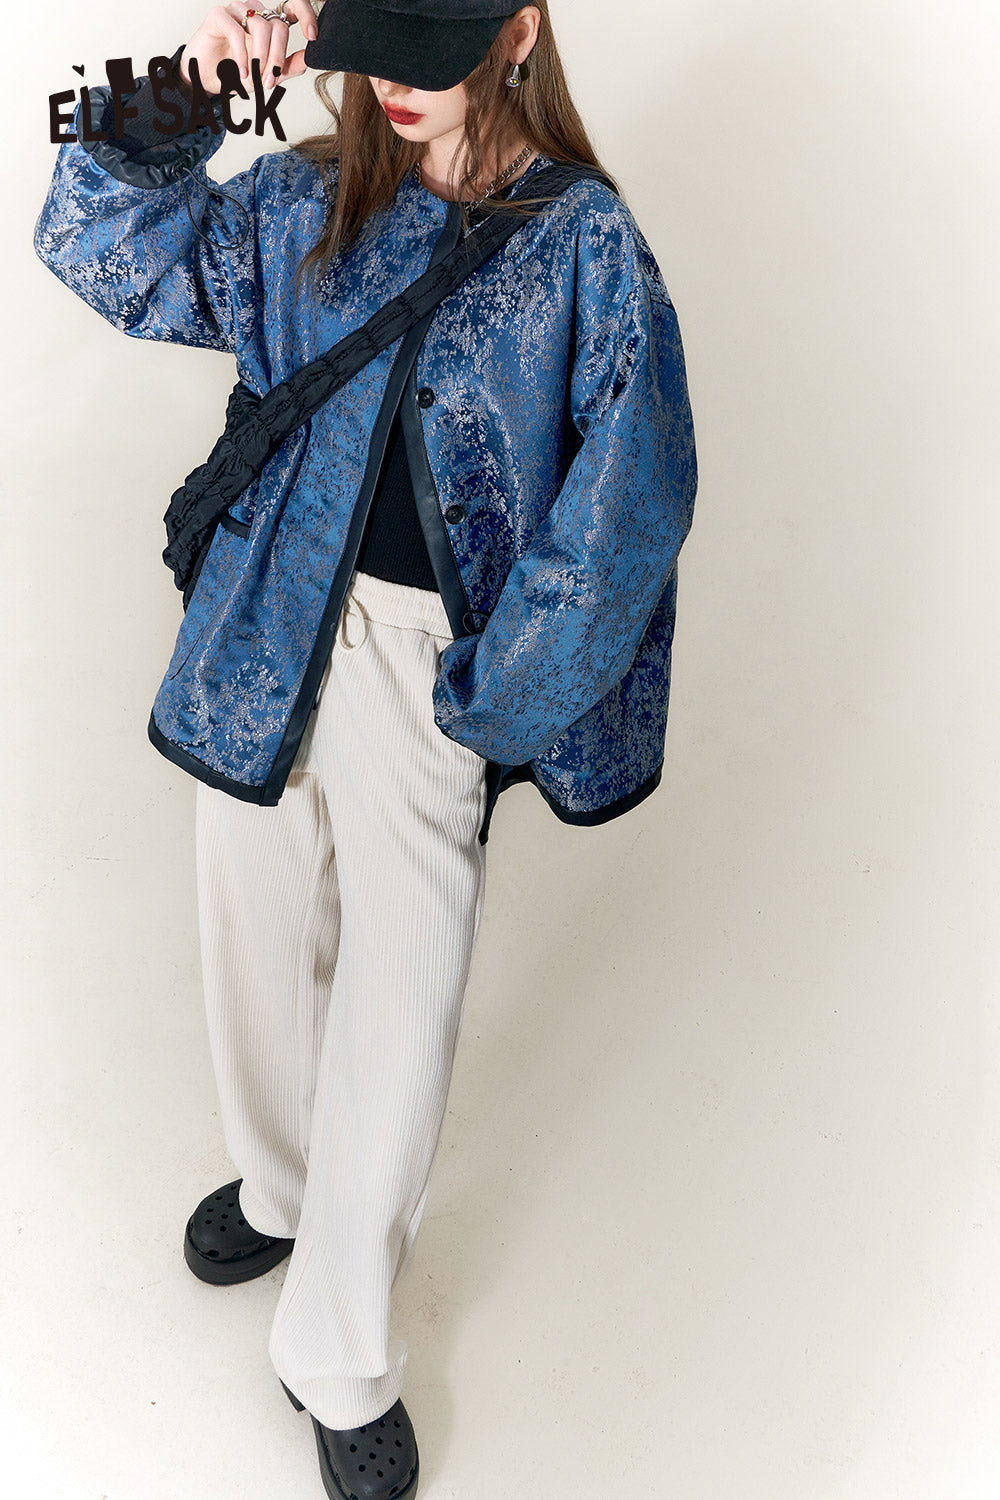 
                  
                    ELFSACK Blue Thickening Cotton Coats Women 2023 Winter New Chinese Style Designer Jackets
                  
                